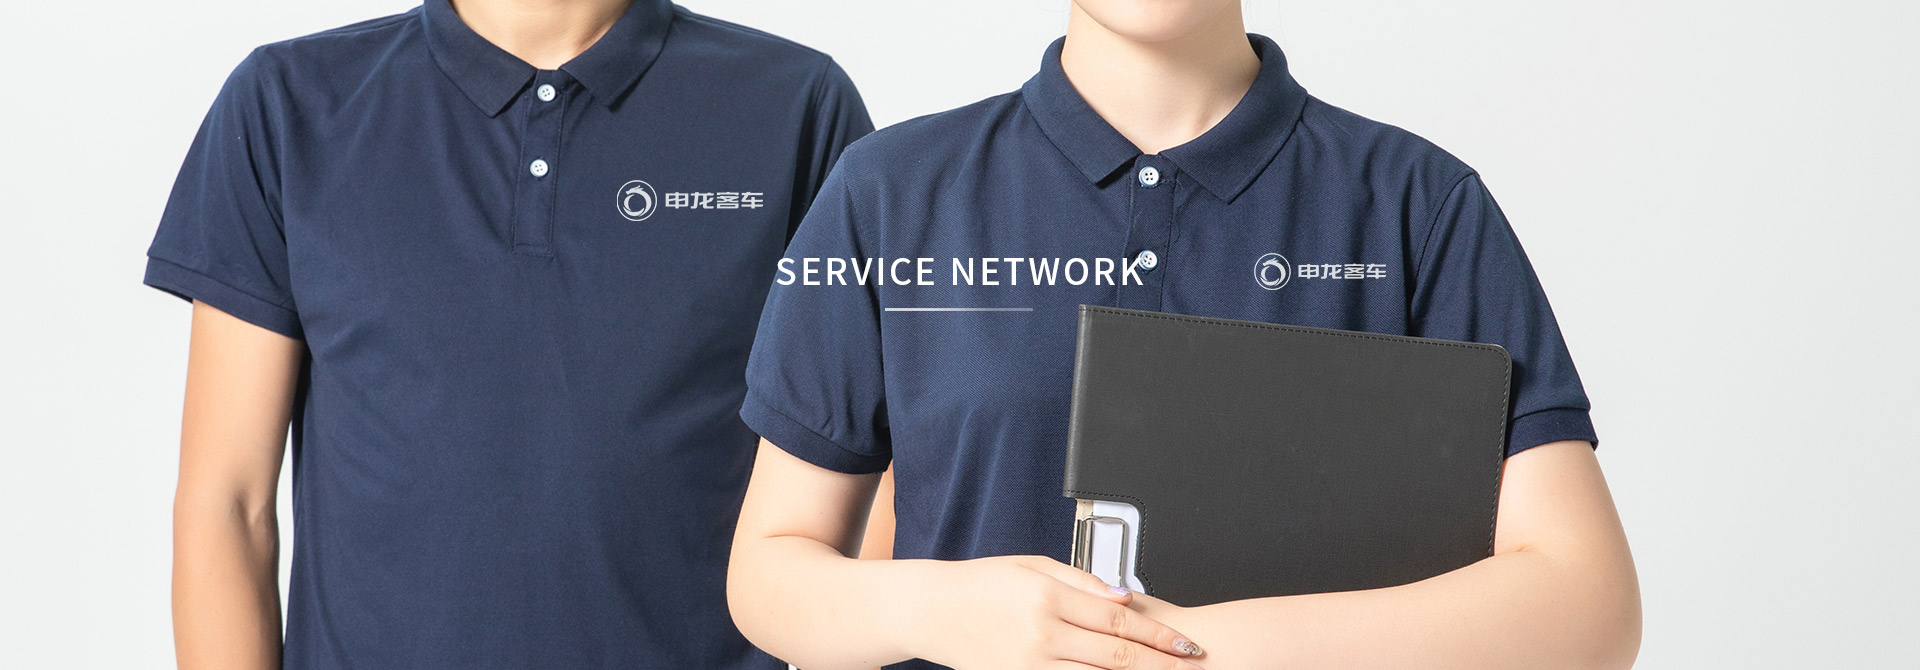 Service network